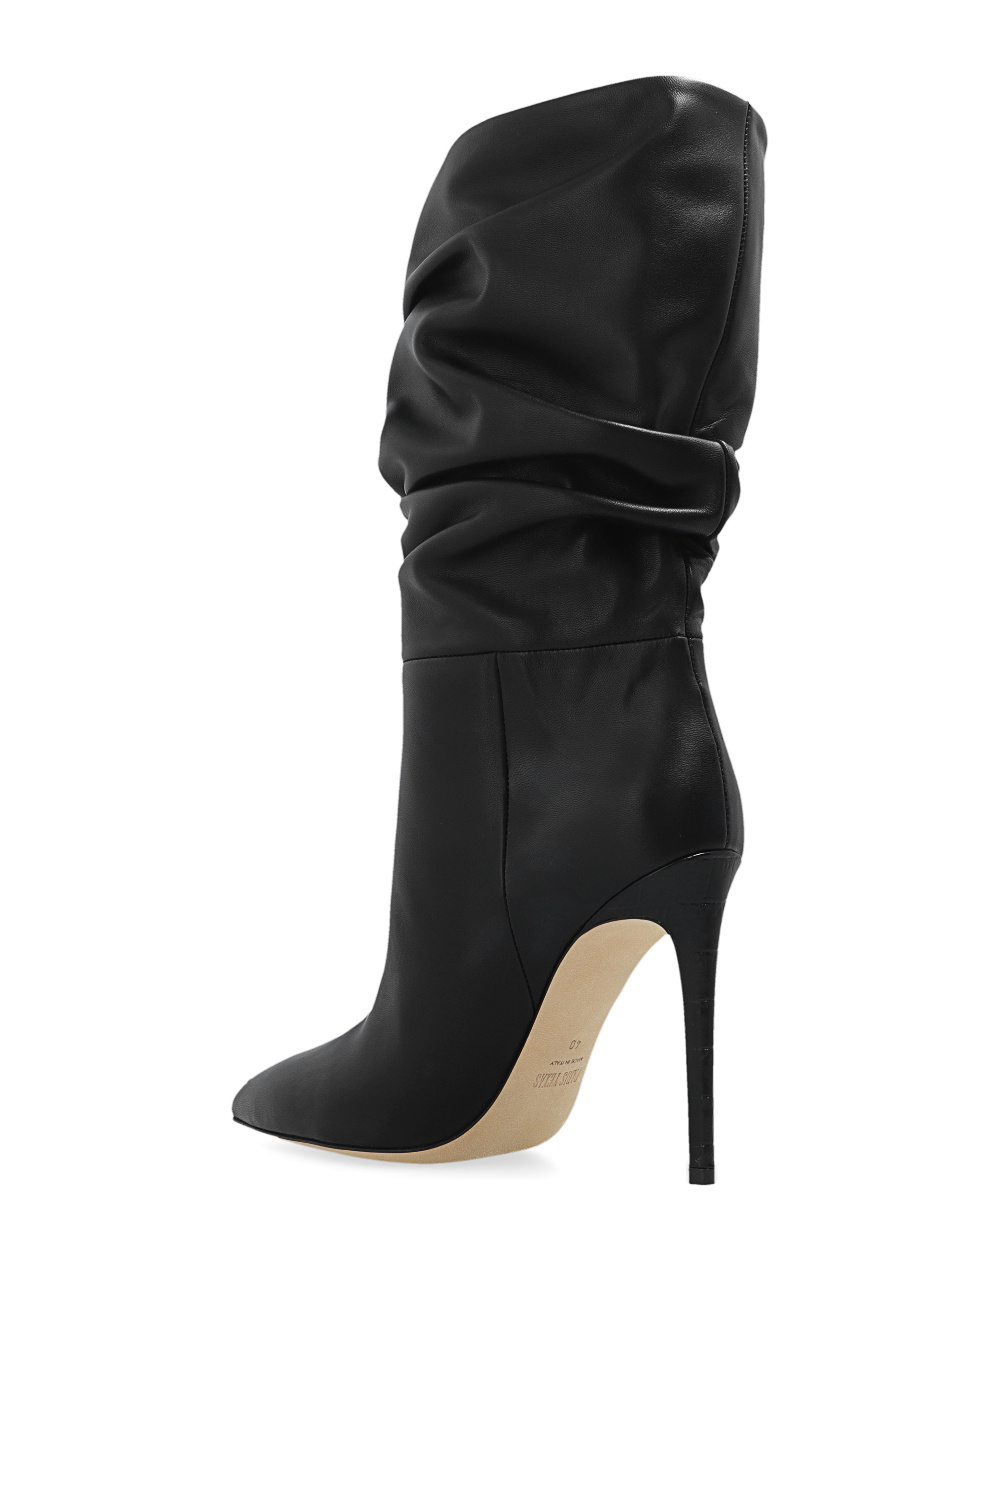 Paris Texas 1-009467-2000 heeled boots